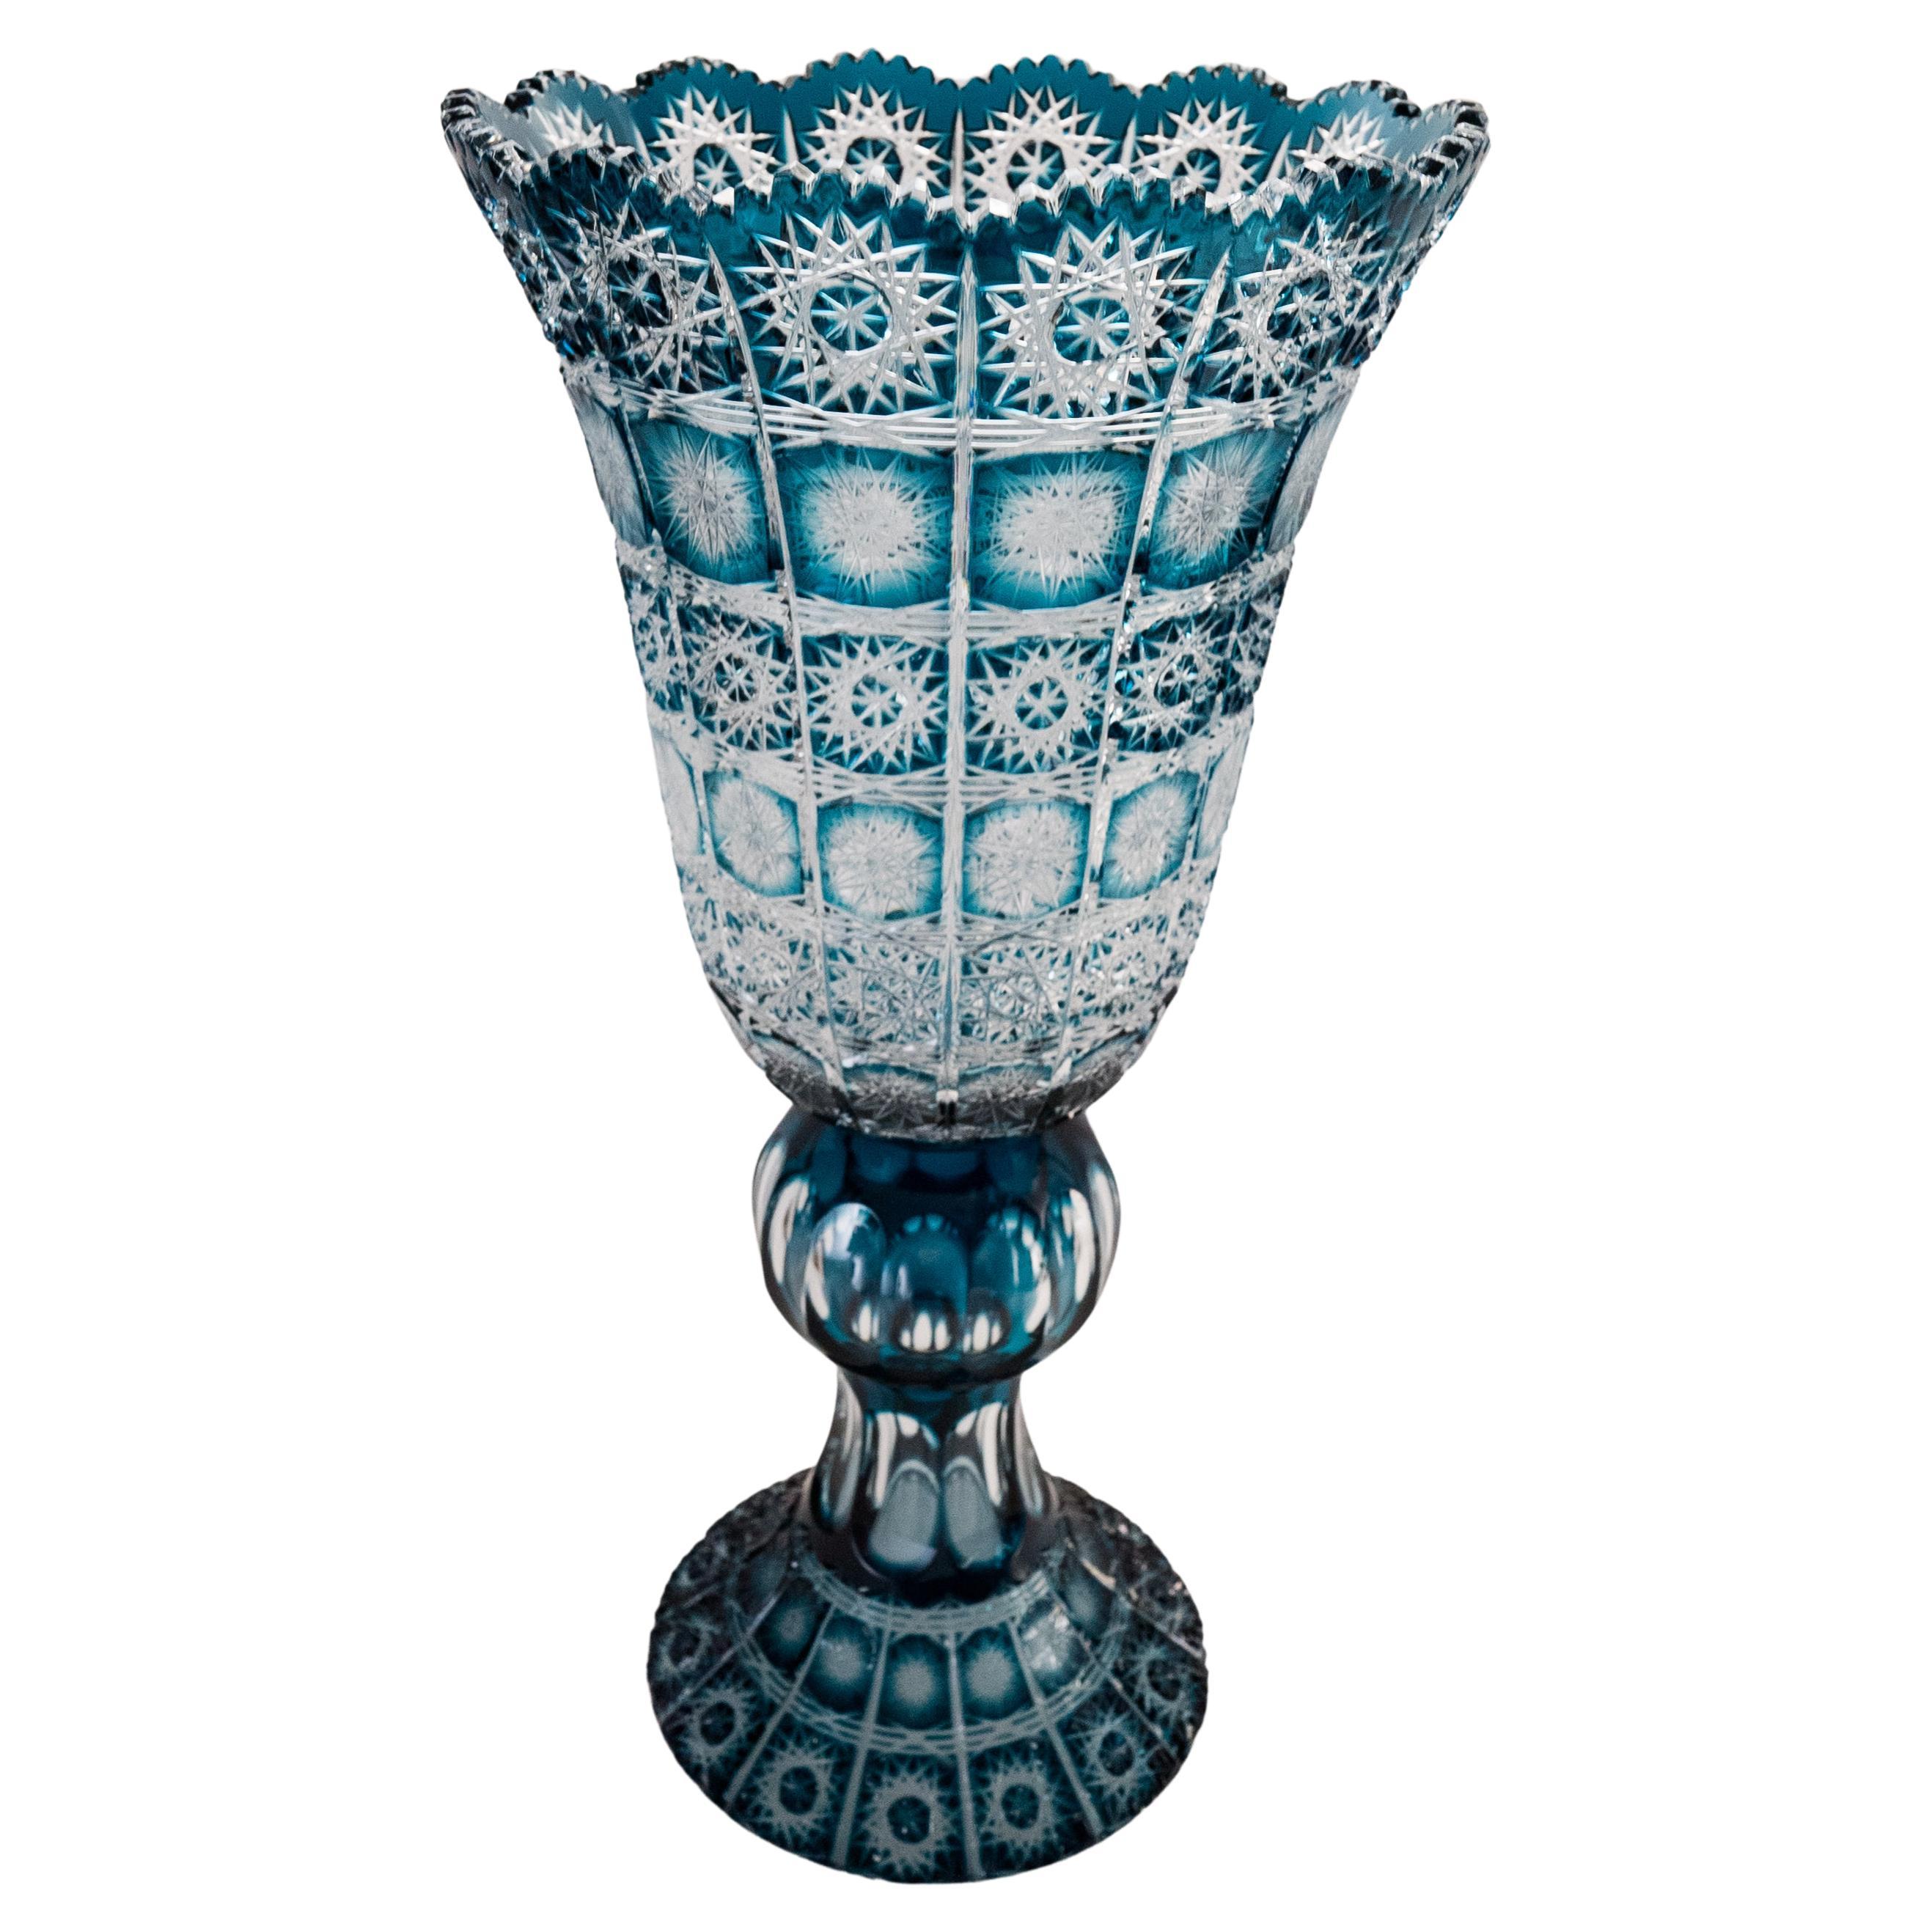 Monumental Teal or Turquoise Cut Crystal Vase, Vintage Bohemian, Very Tall